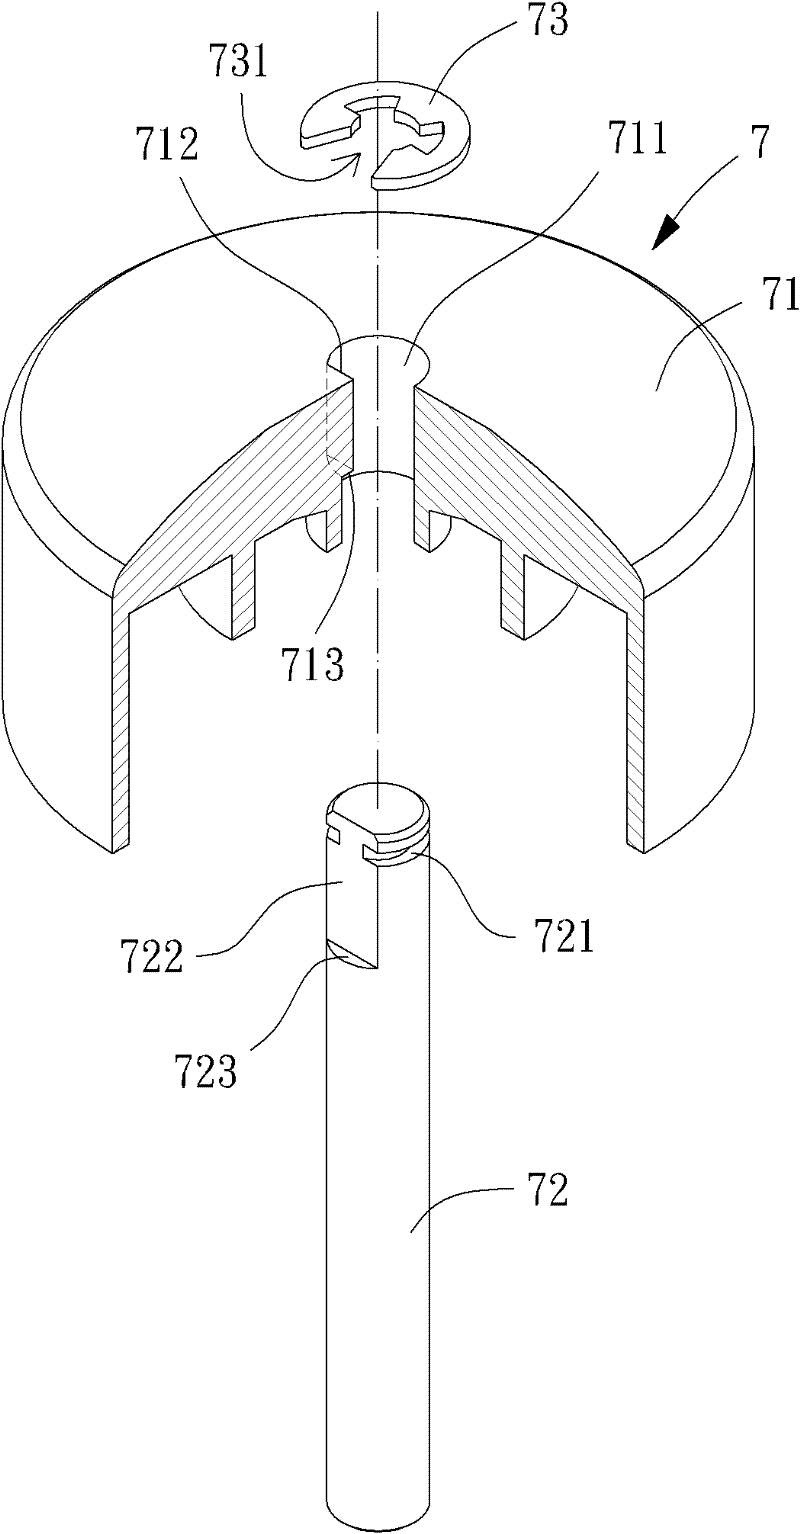 Rotor of motor